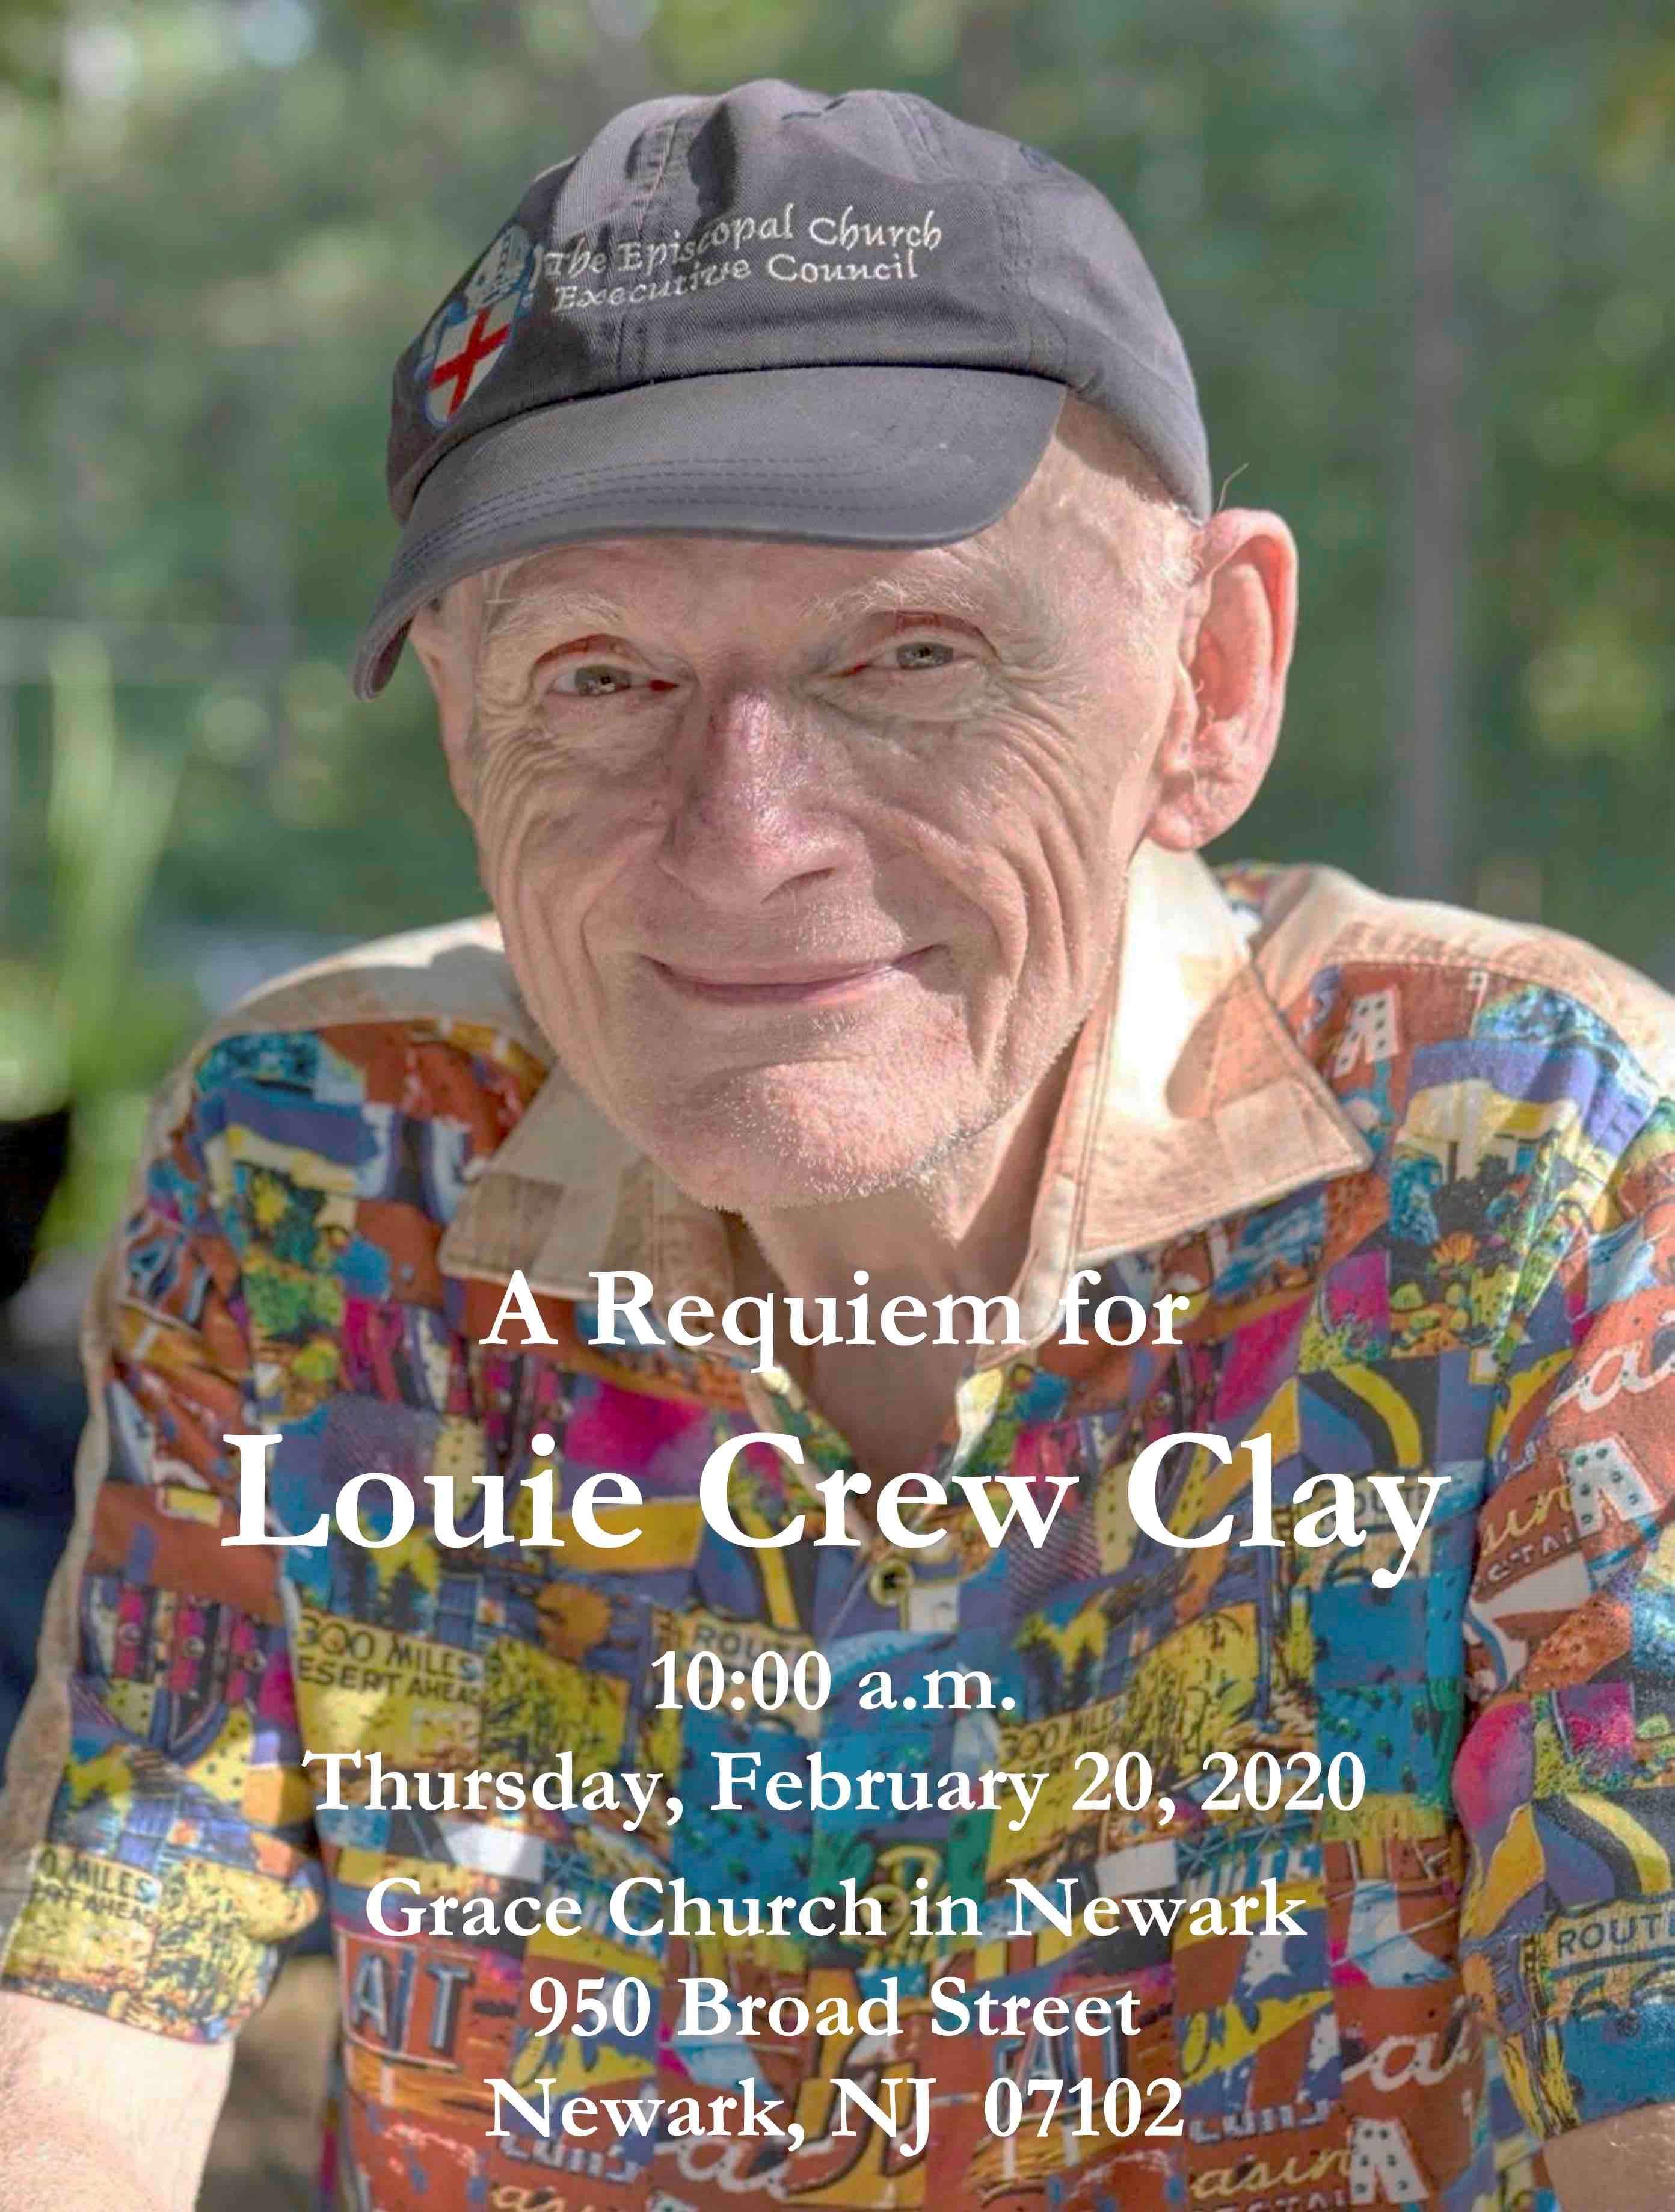 Louie Crew Clay